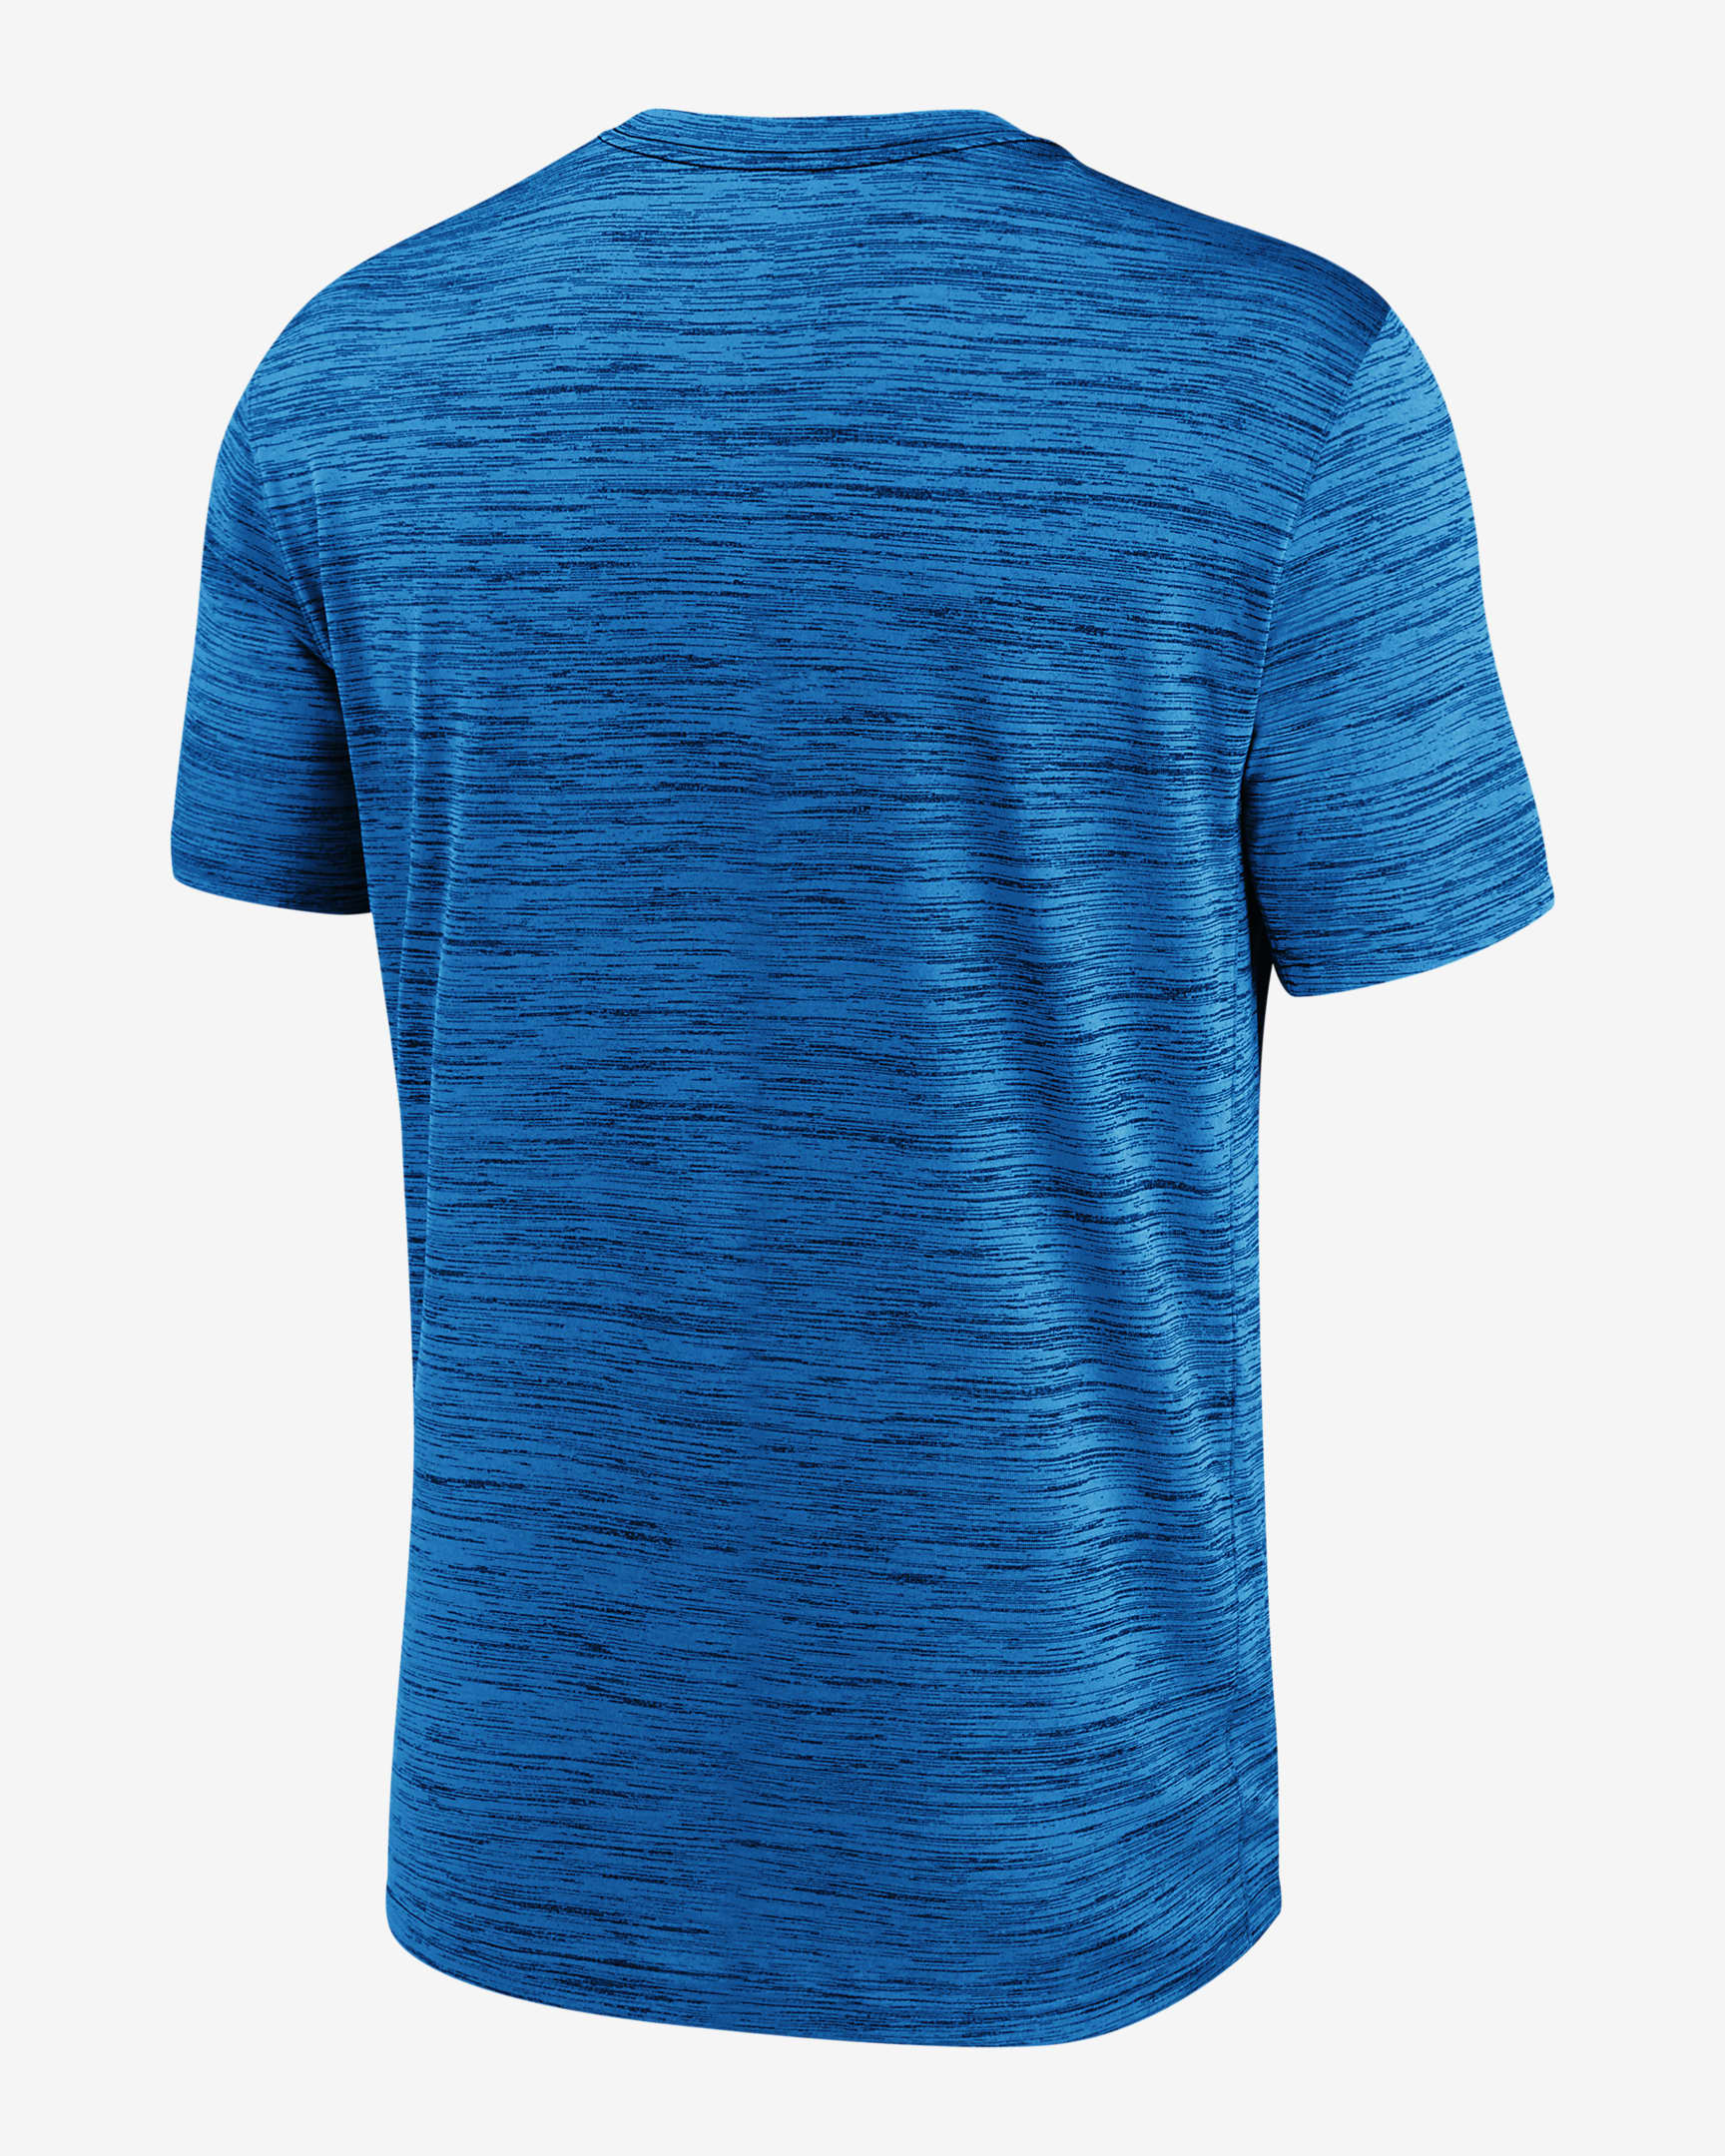 Nike Dri-FIT Sideline Velocity (NFL Carolina Panthers) Men's T-Shirt ...